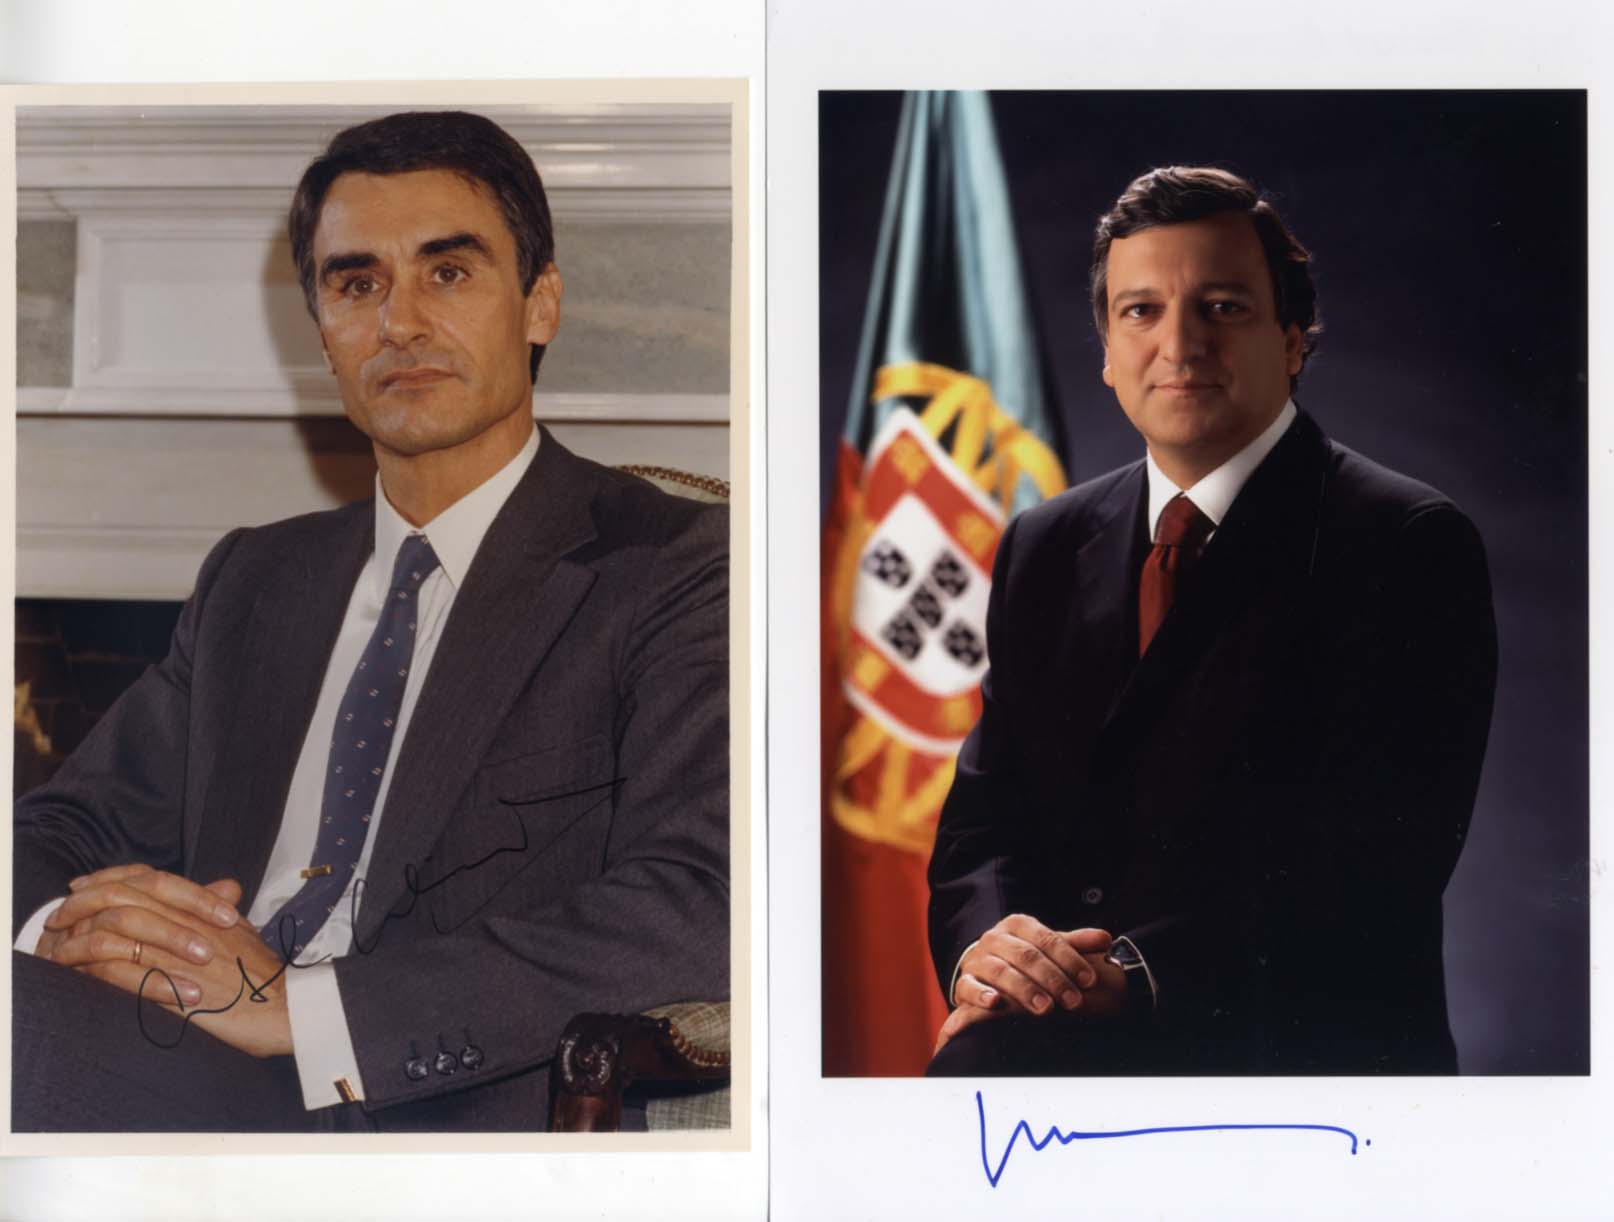 Aníbal Antonio Cavaco &amp; José Manuel Silva &amp; Barroso Autograph Autogramm | ID 8401636524181